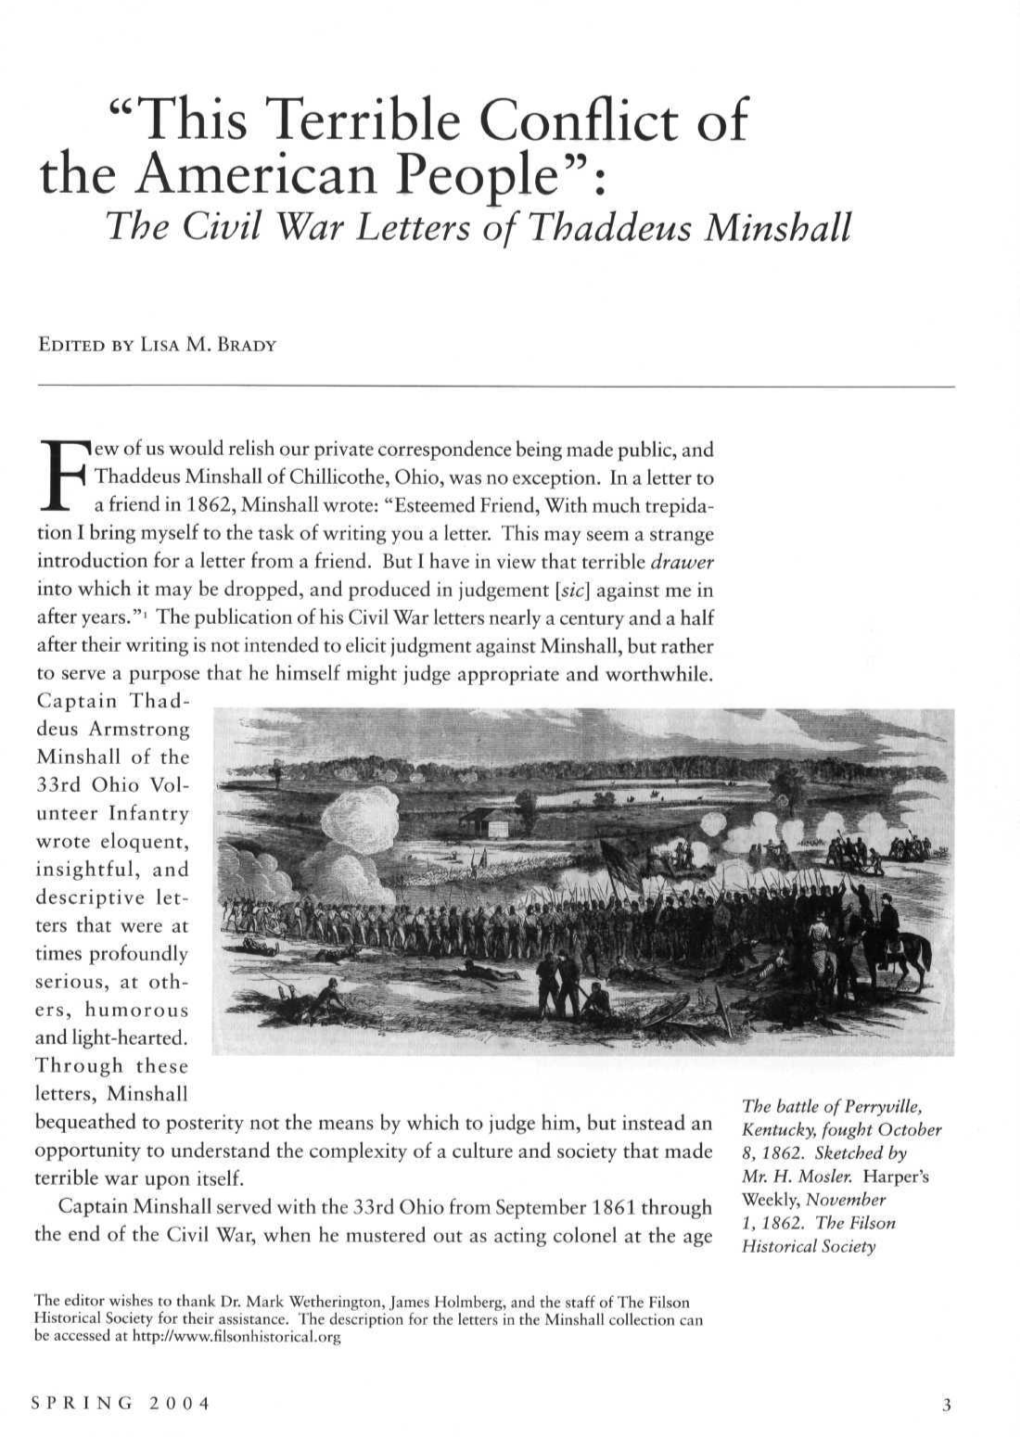 The Civil War Letters of Thaddeus Minshall